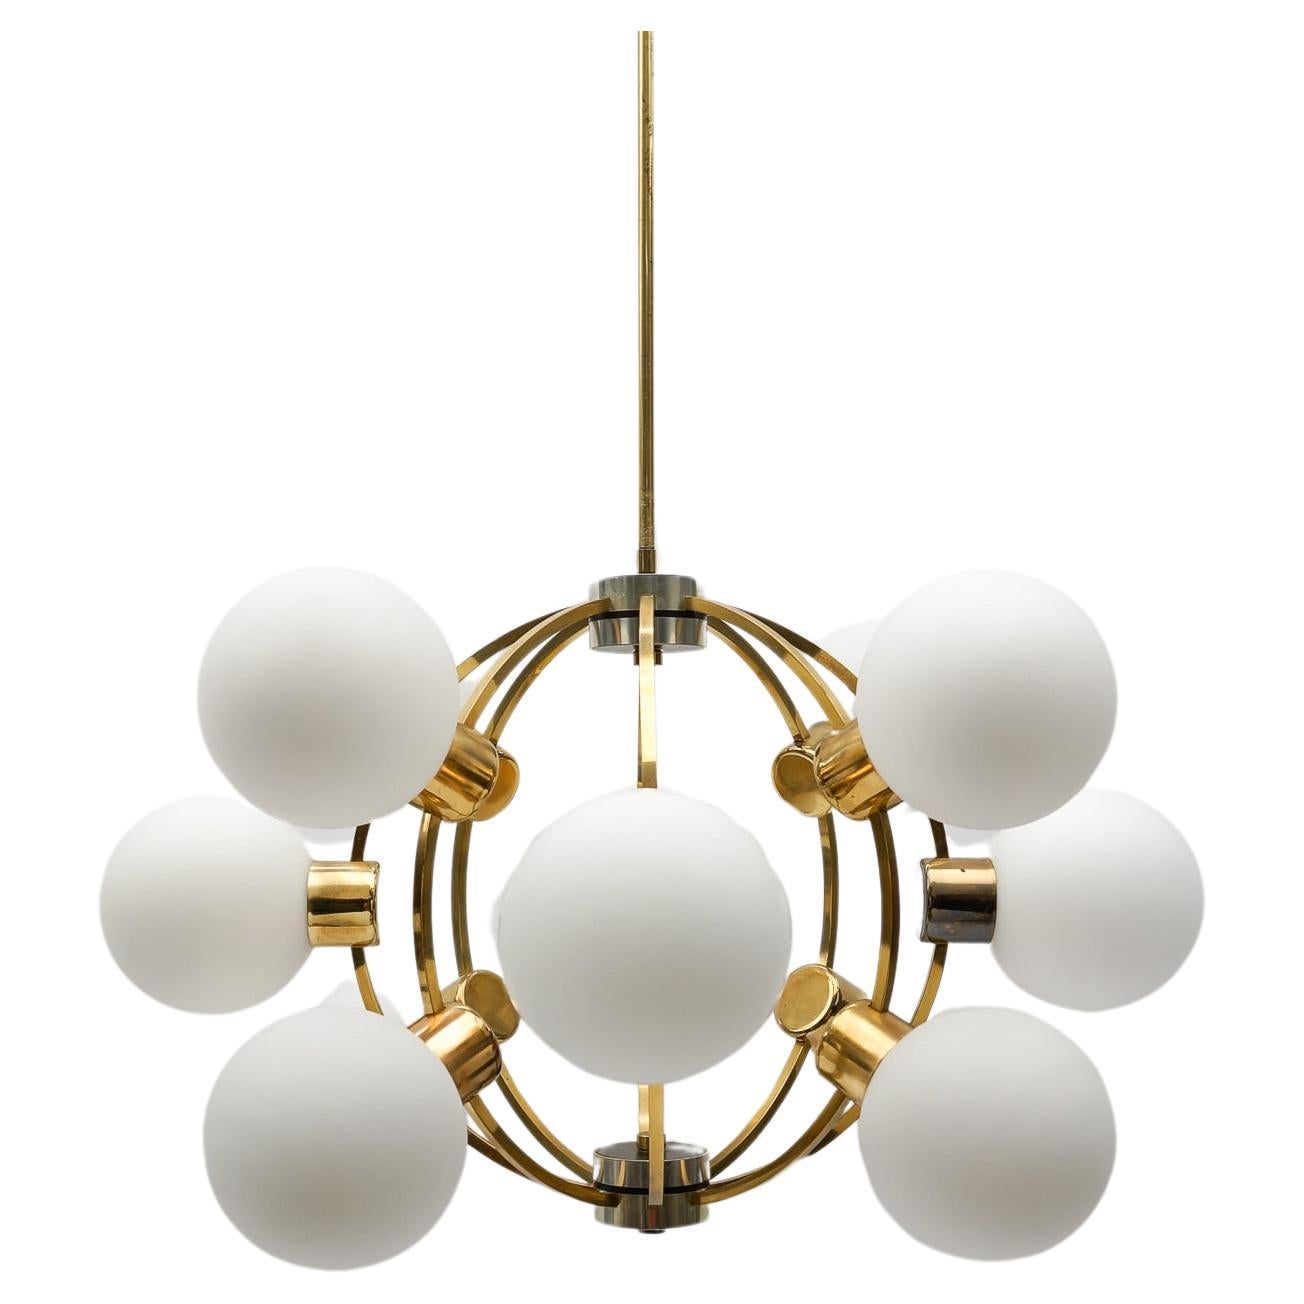 Large Mid-Century Modern Orbit or Sputnik Lamp with 12 Opaline Glass Balls